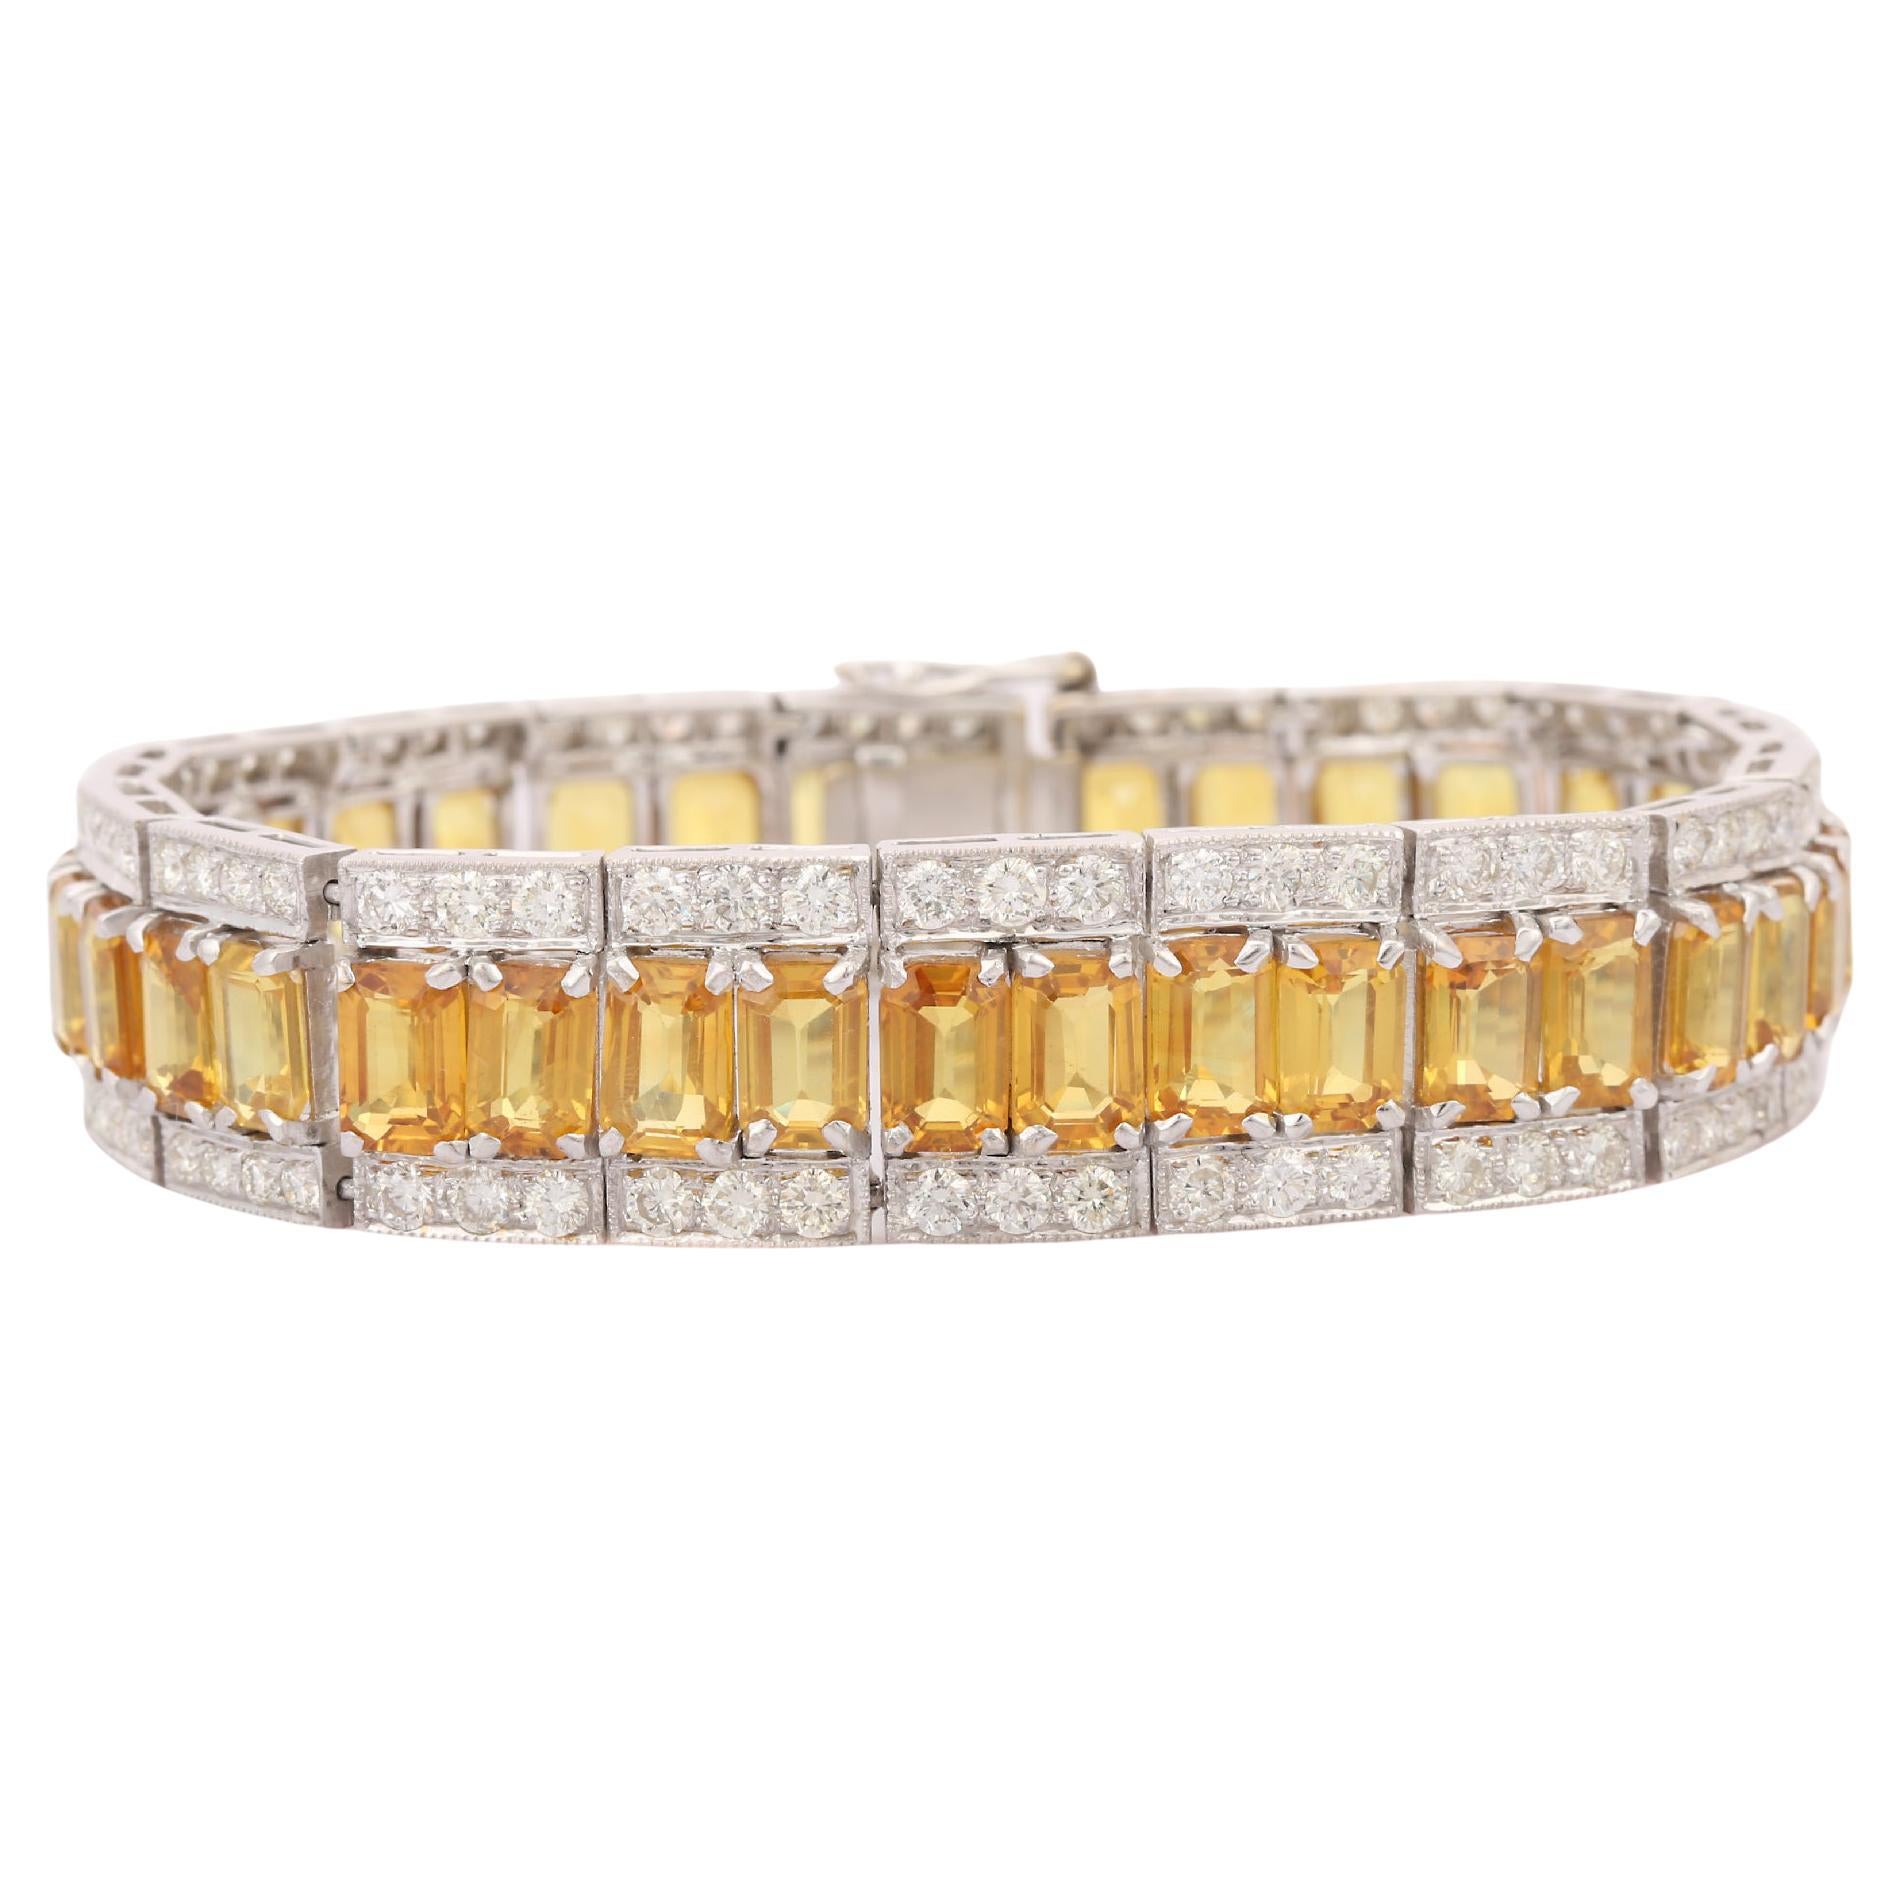 Bracelet en or blanc massif 18 carats avec saphir jaune de 37,87 carats et diamants de 5,34 carats